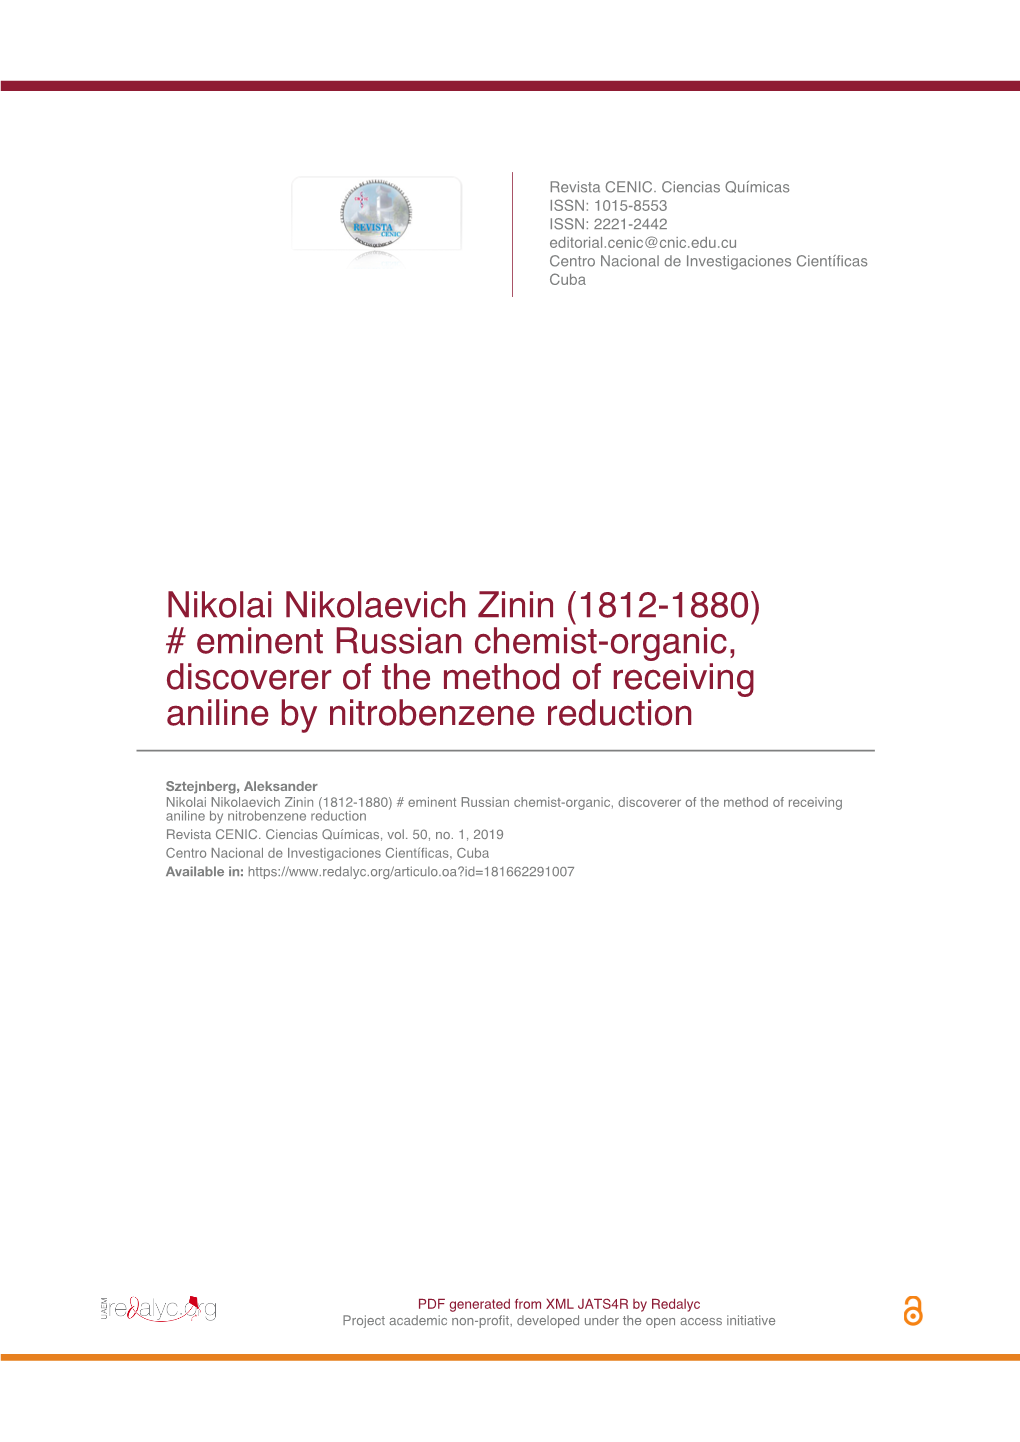 Nikolai Nikolaevich Zinin (1812-1880) ‒ Eminent Russian Chemist-Organic, Discoverer of the Method of Receiving Aniline by Nitrobenzene Reduction